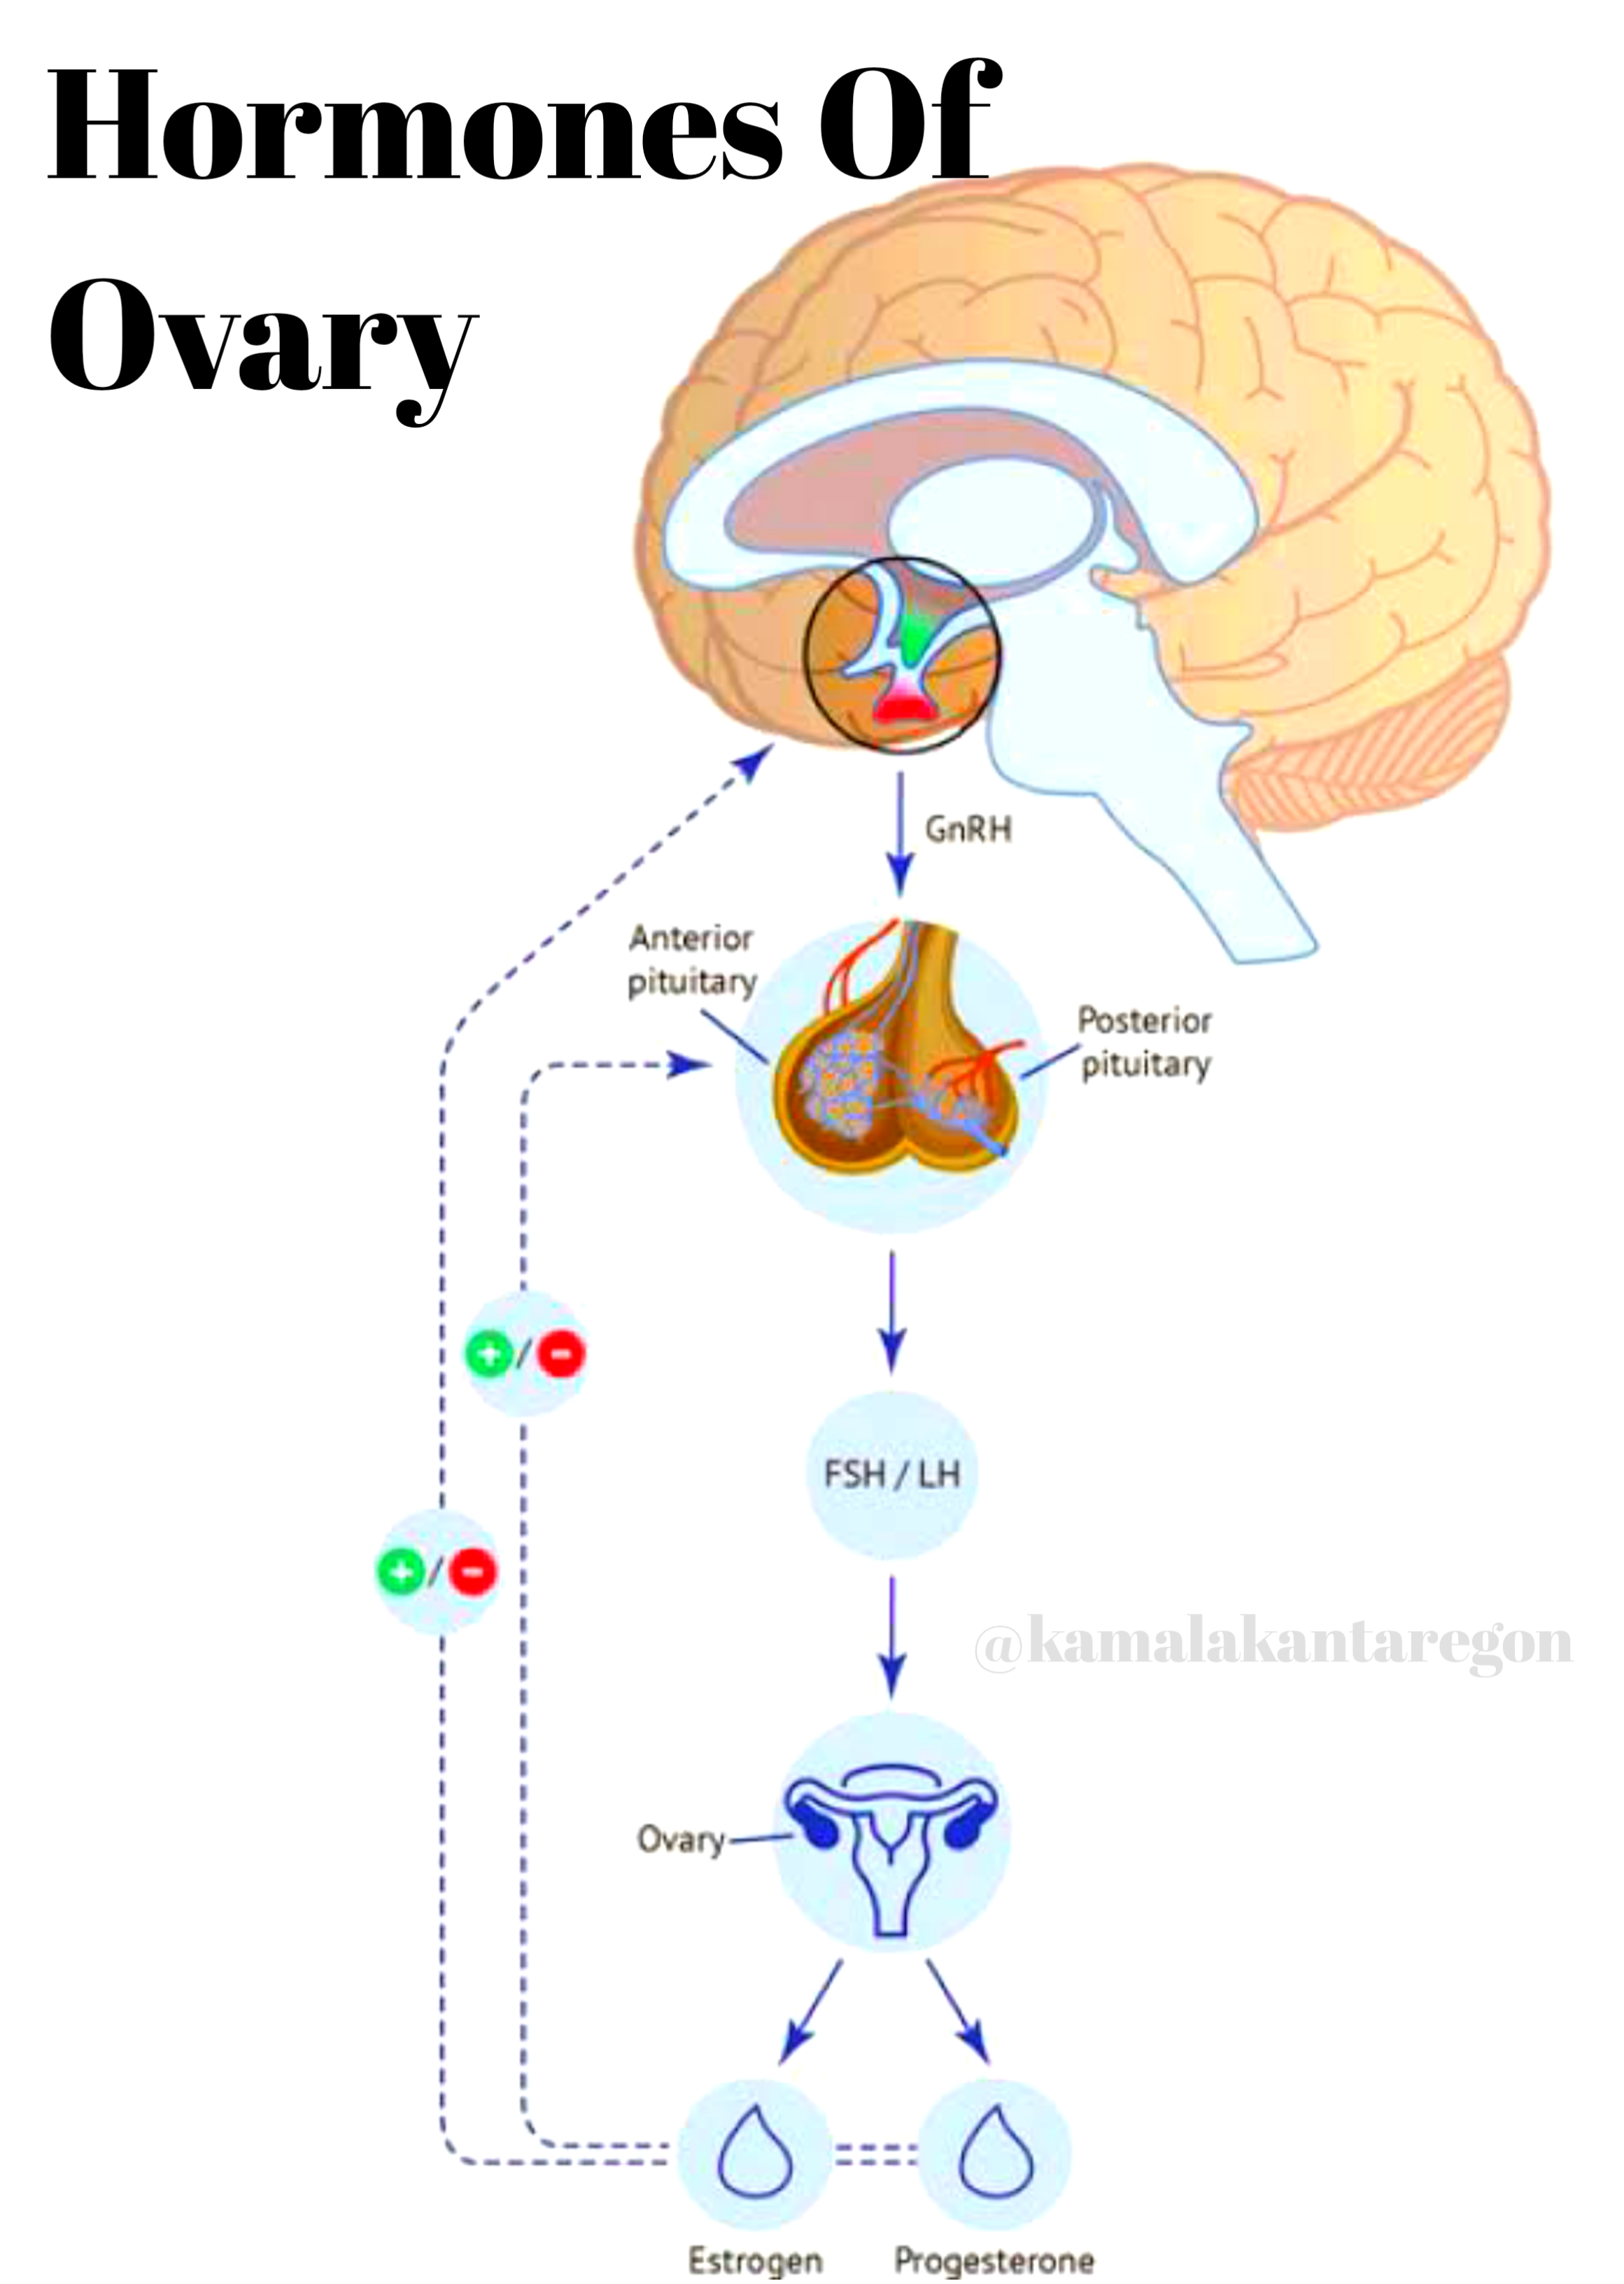 Pituitary-gland